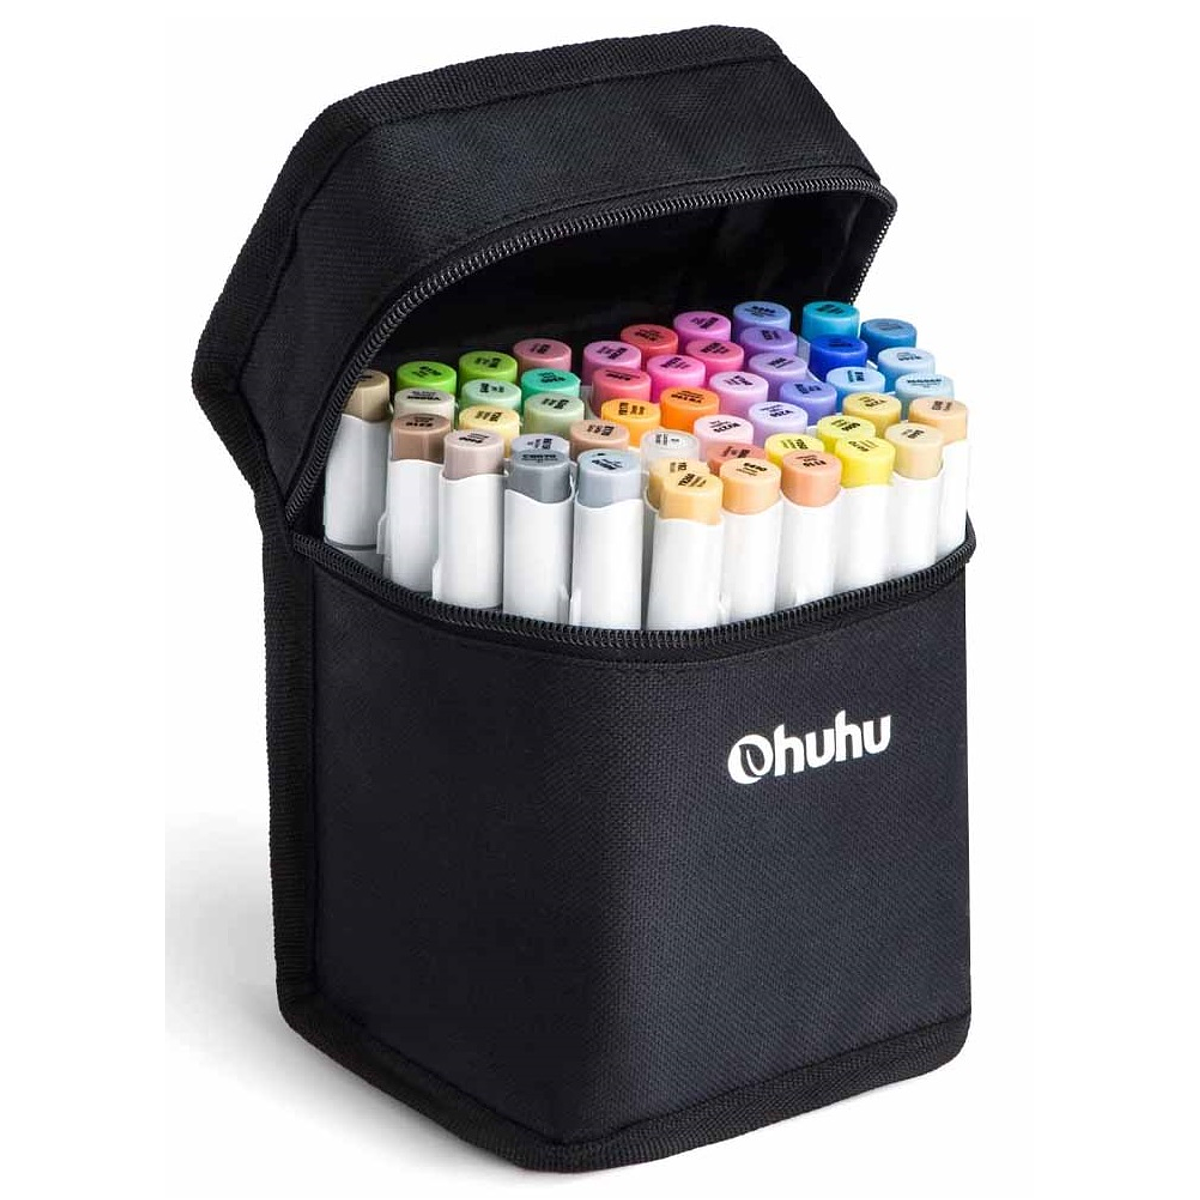 24 rotuladores de colores a base de alcohol Ohuhu. Rotuladores de